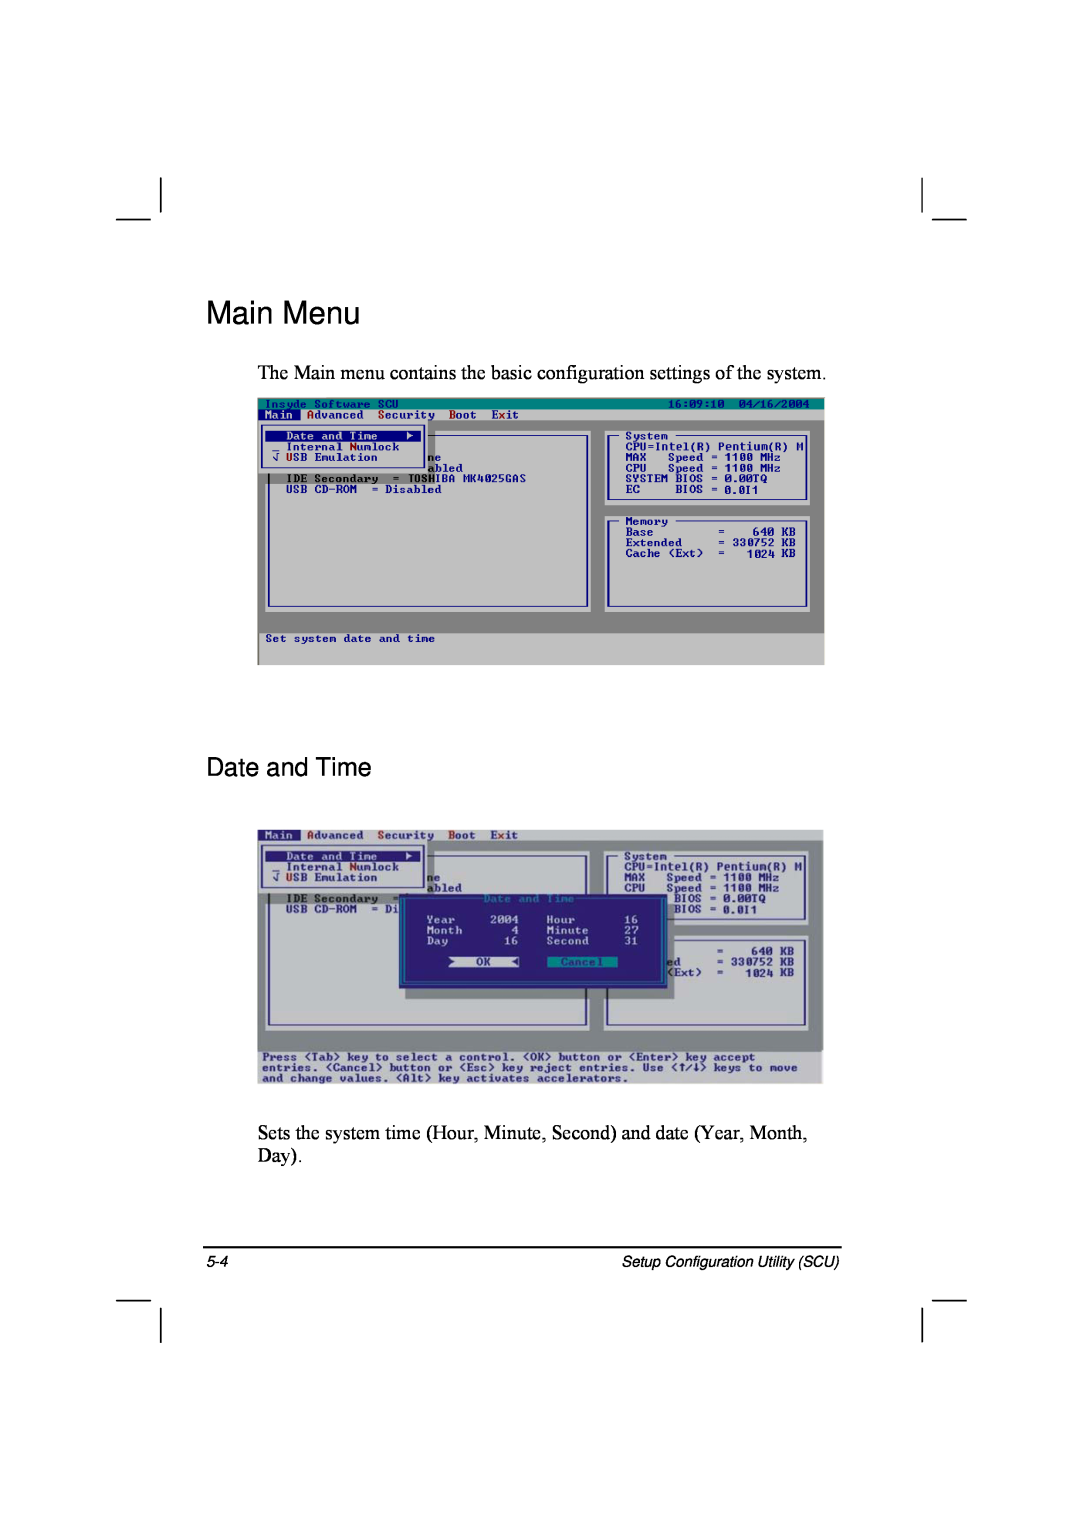 TAG 20 Series manual Main Menu, Date and Time, Setup Configuration Utility SCU 